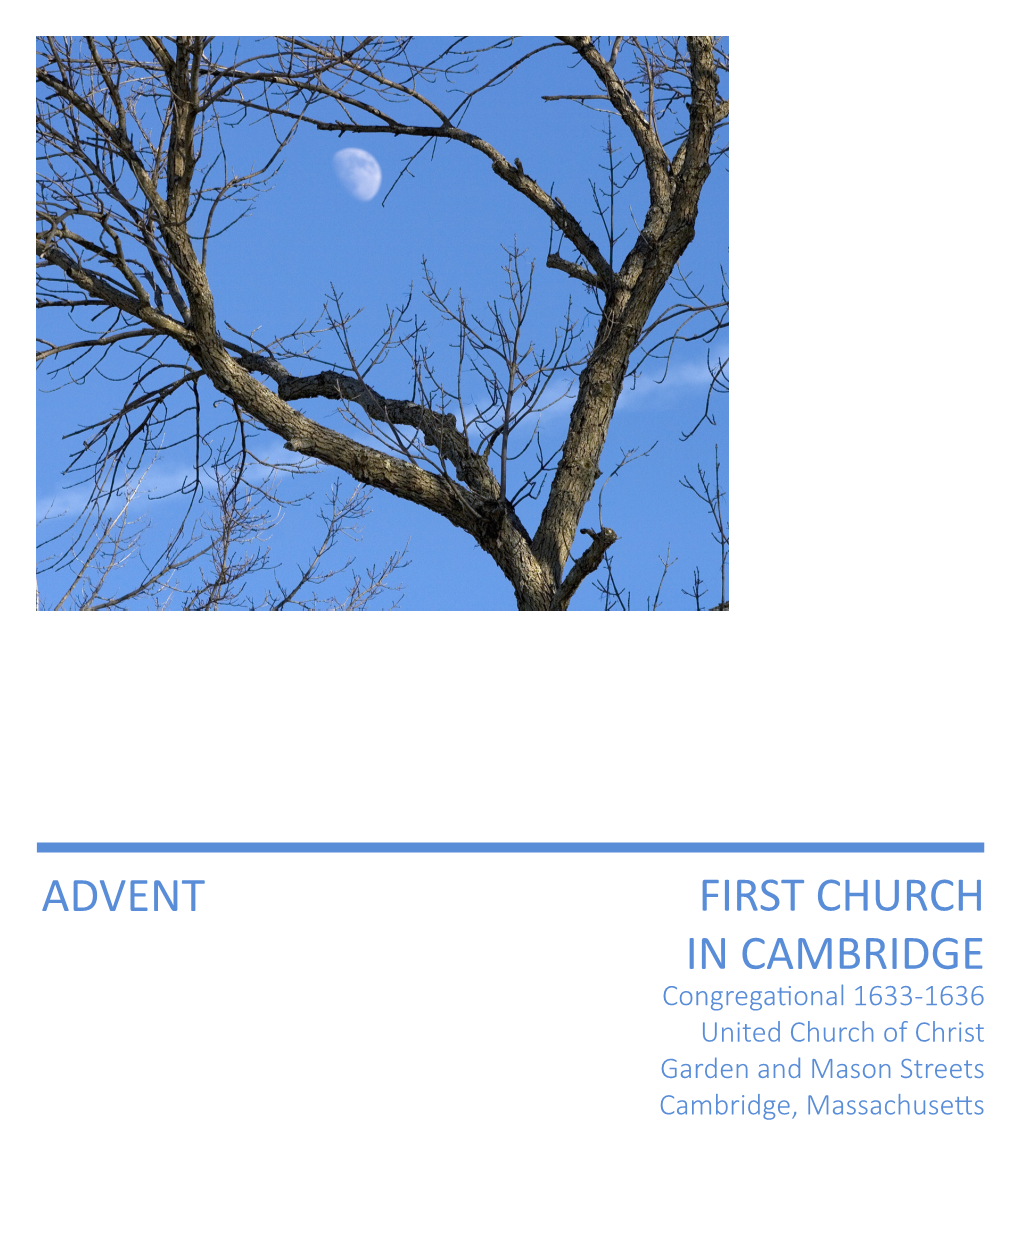 First Church in Cambridge Advent